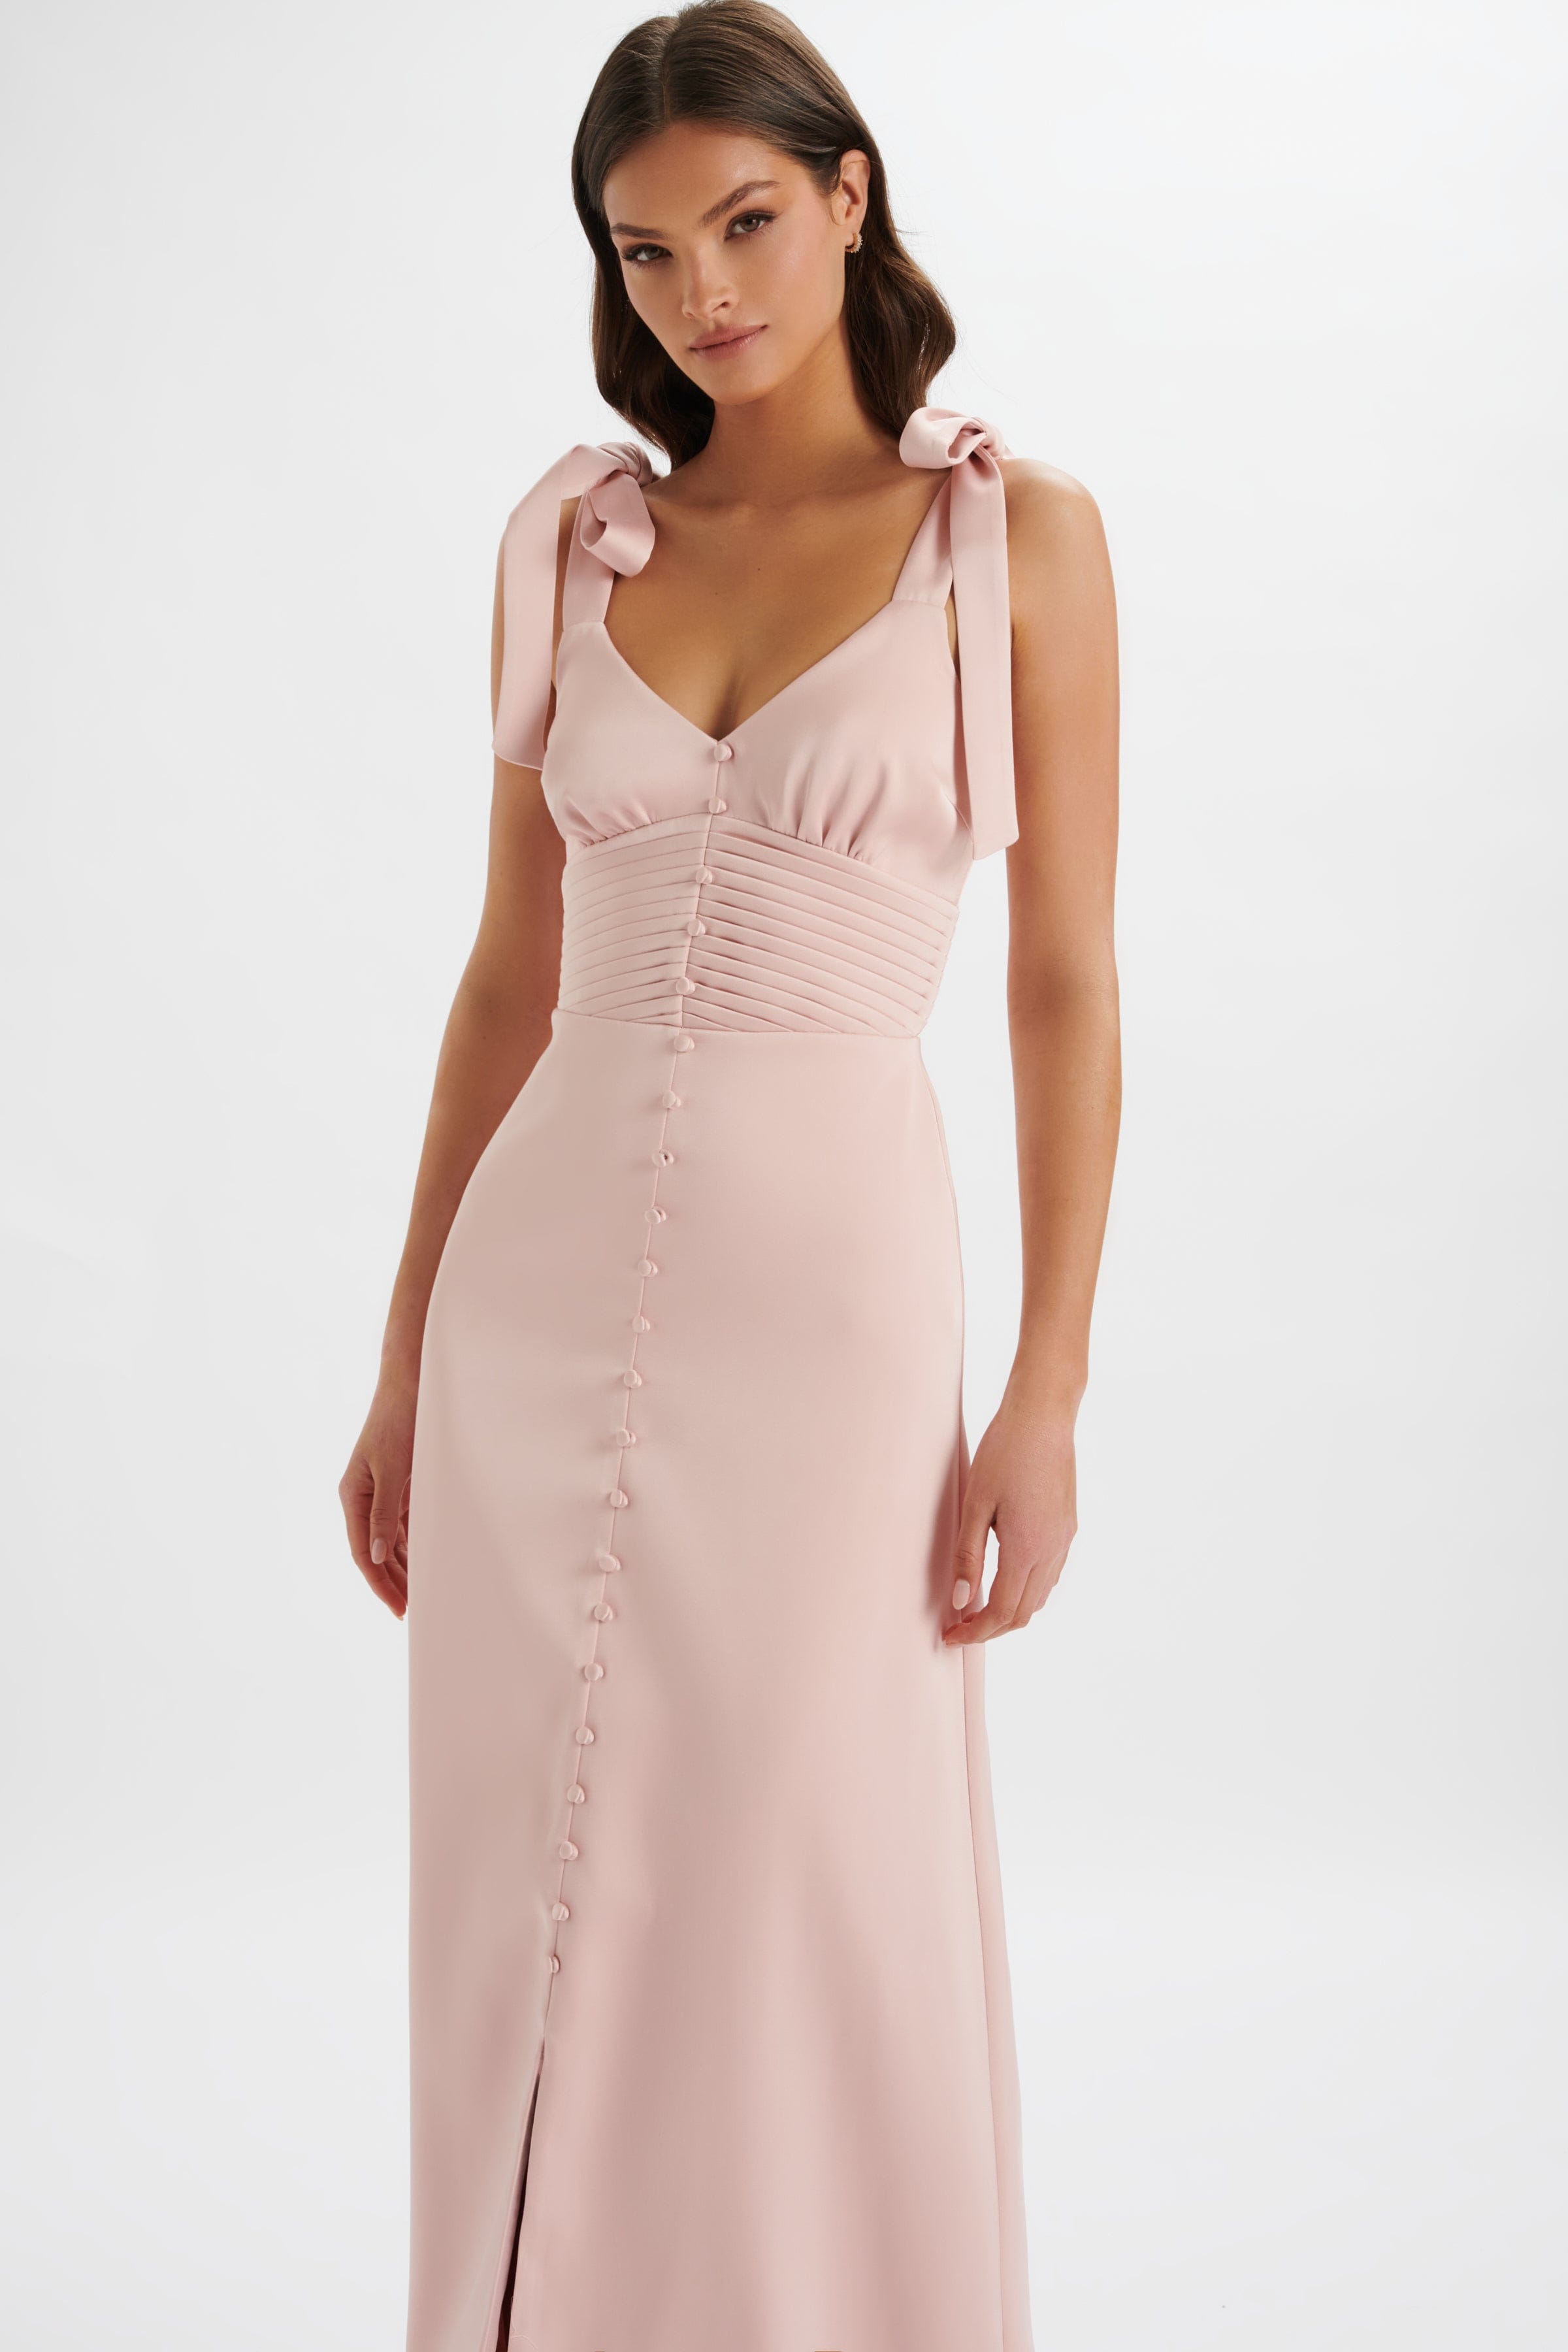 REVE Satin Tie Shoulder Maxi Dress in Pink